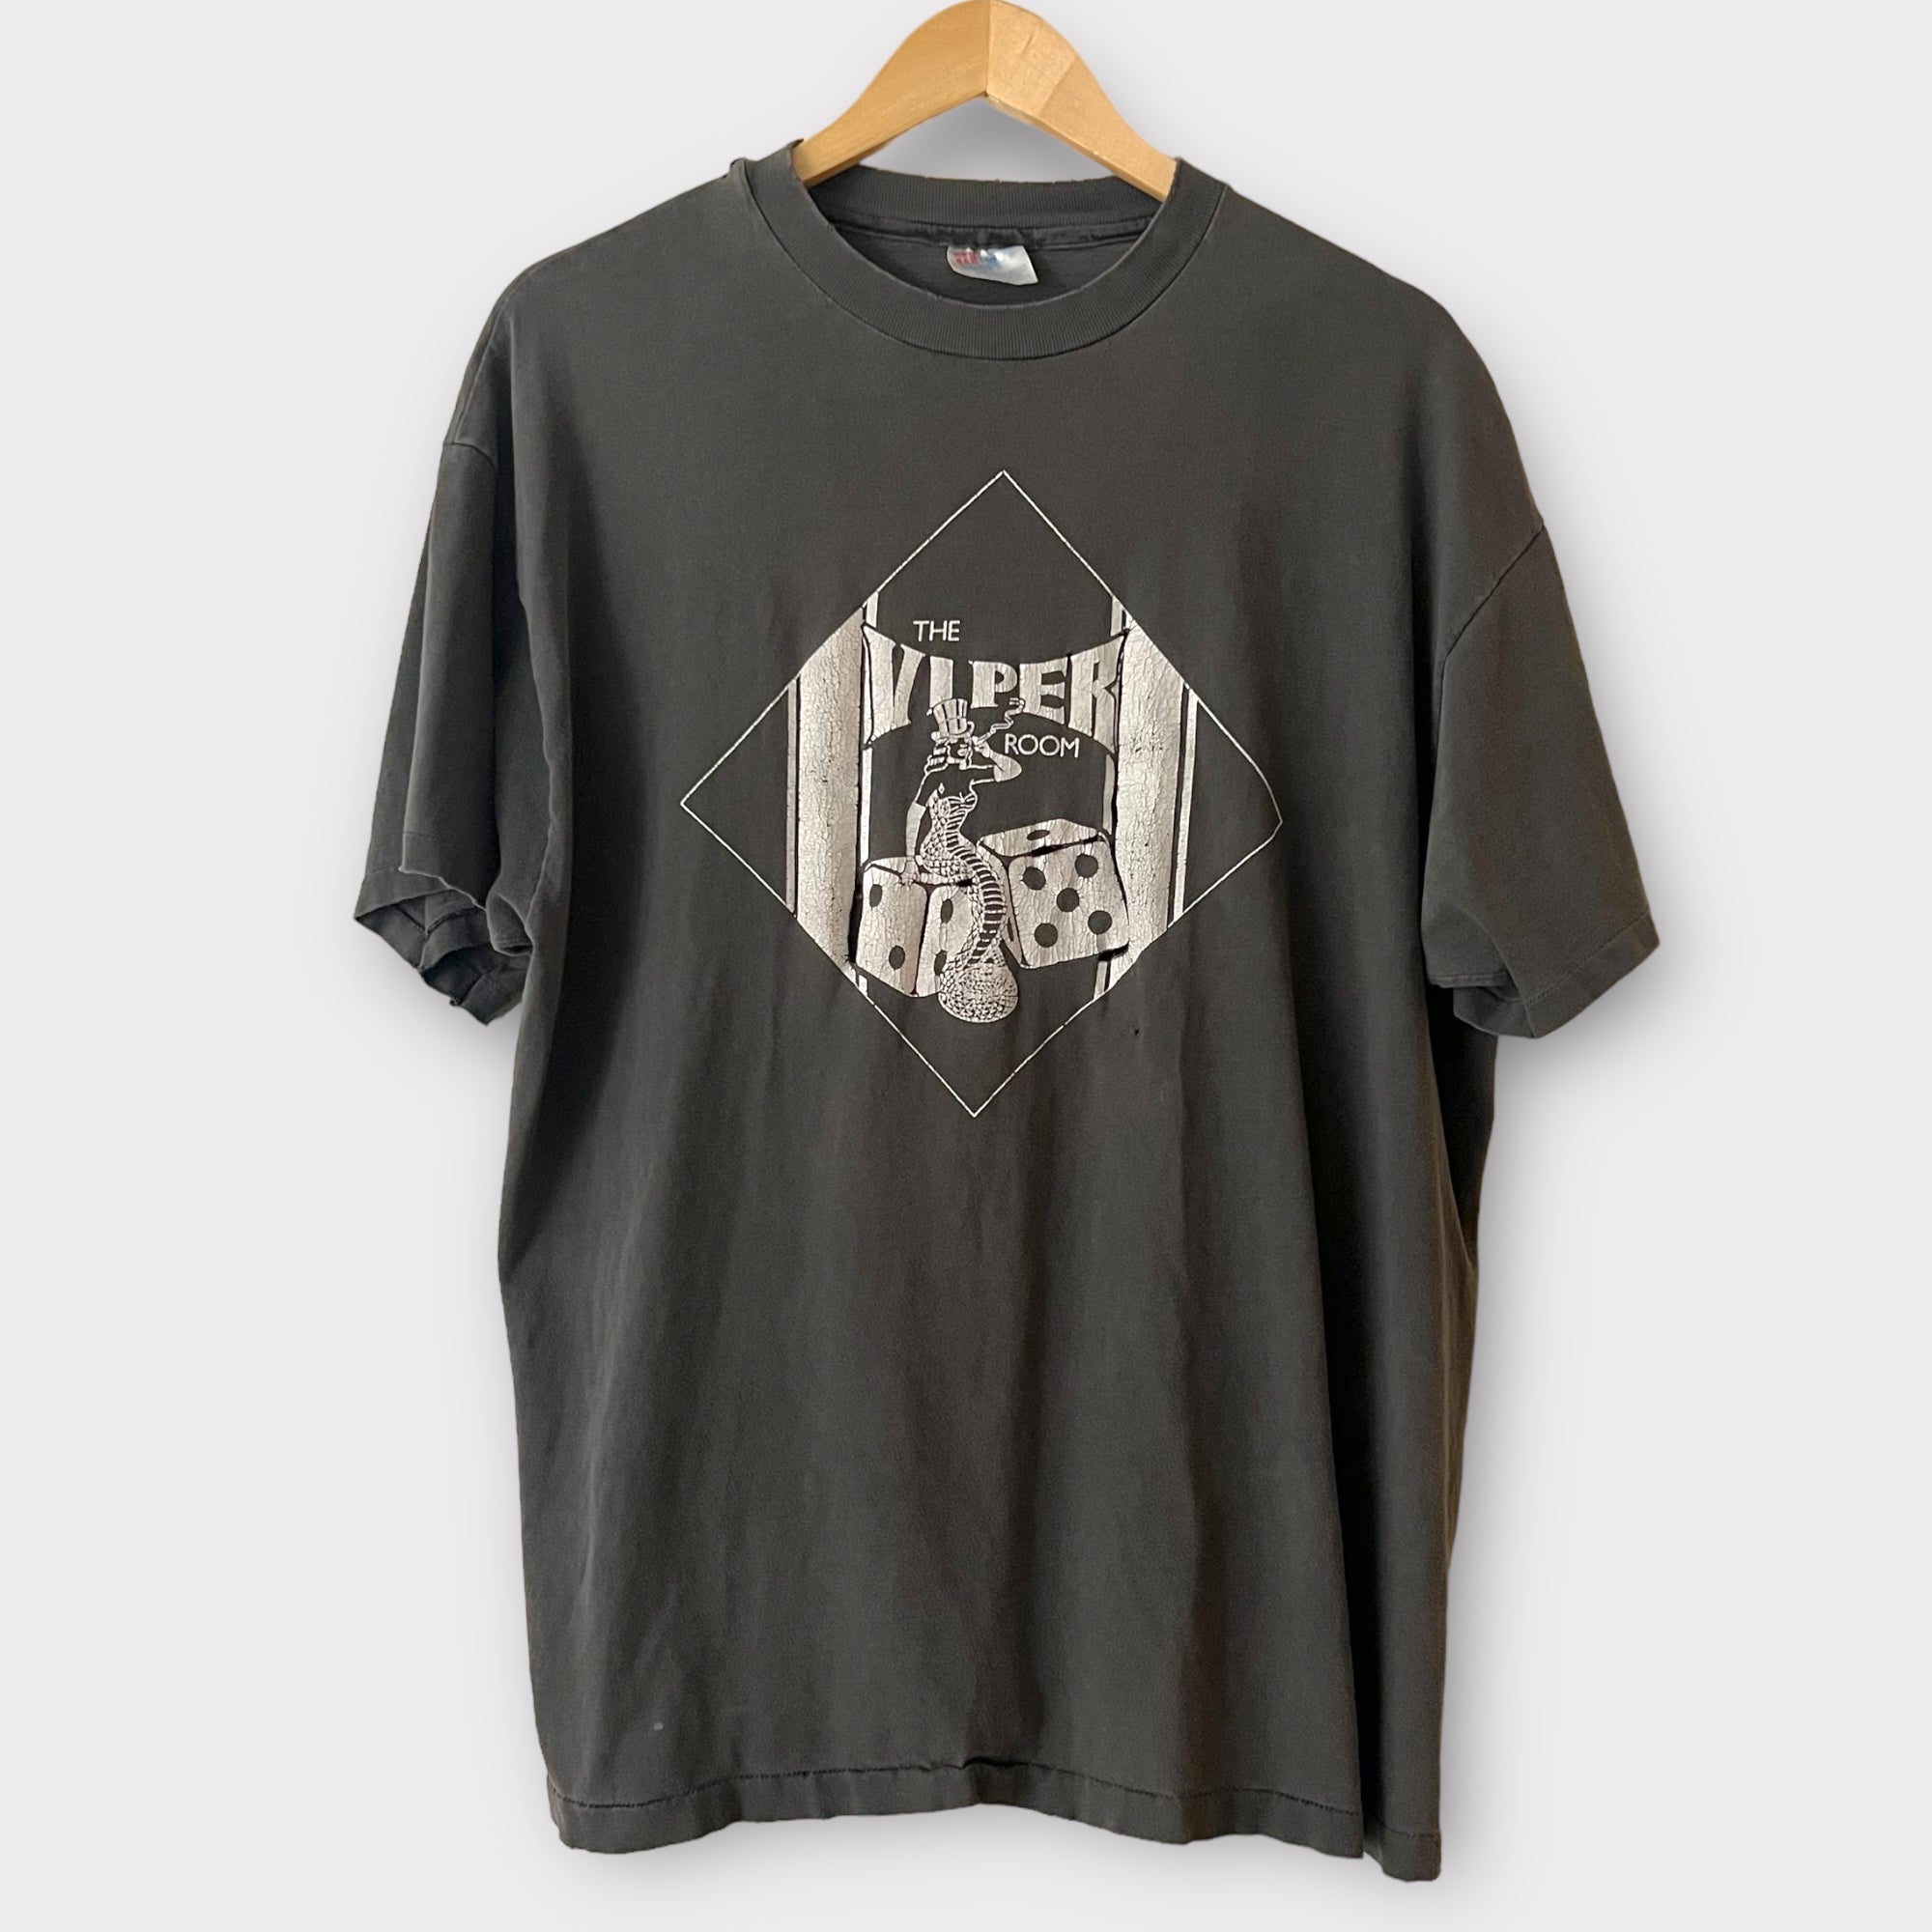 1990s Viper Room Los Angeles Music Venue Vintage Promo Tee Shirt 